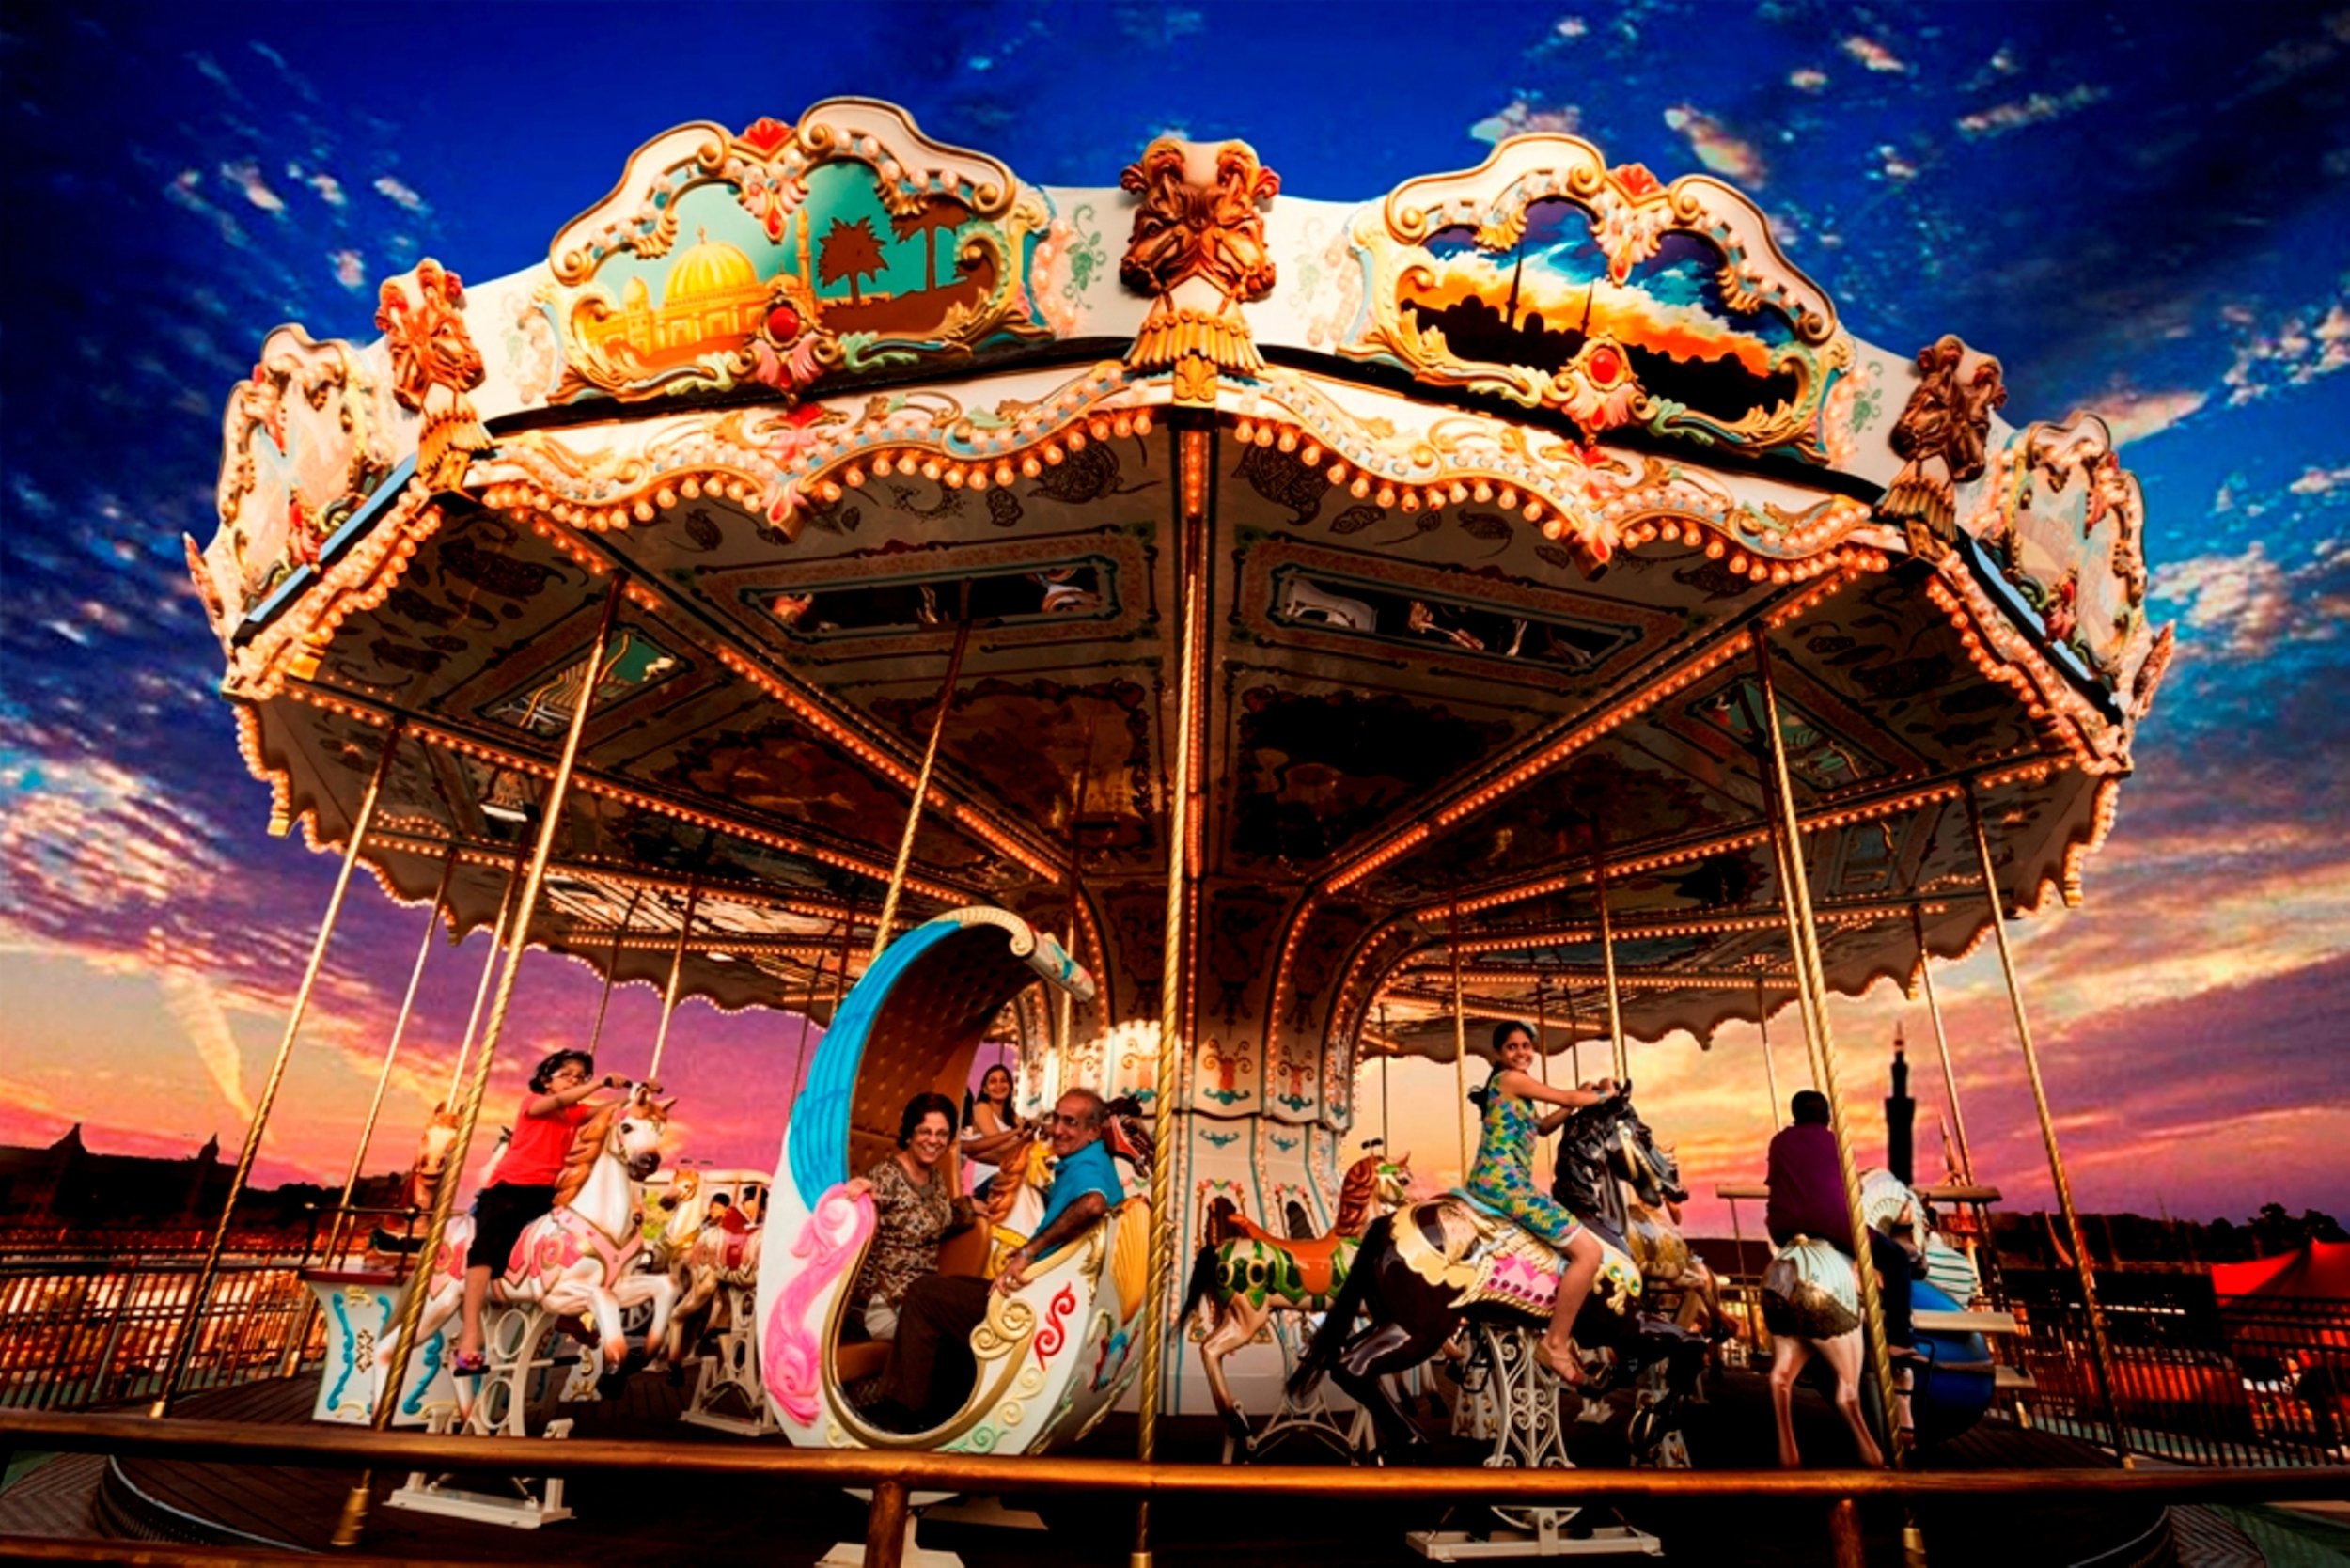 The Magic Carousel at ADLABS IMAGICA